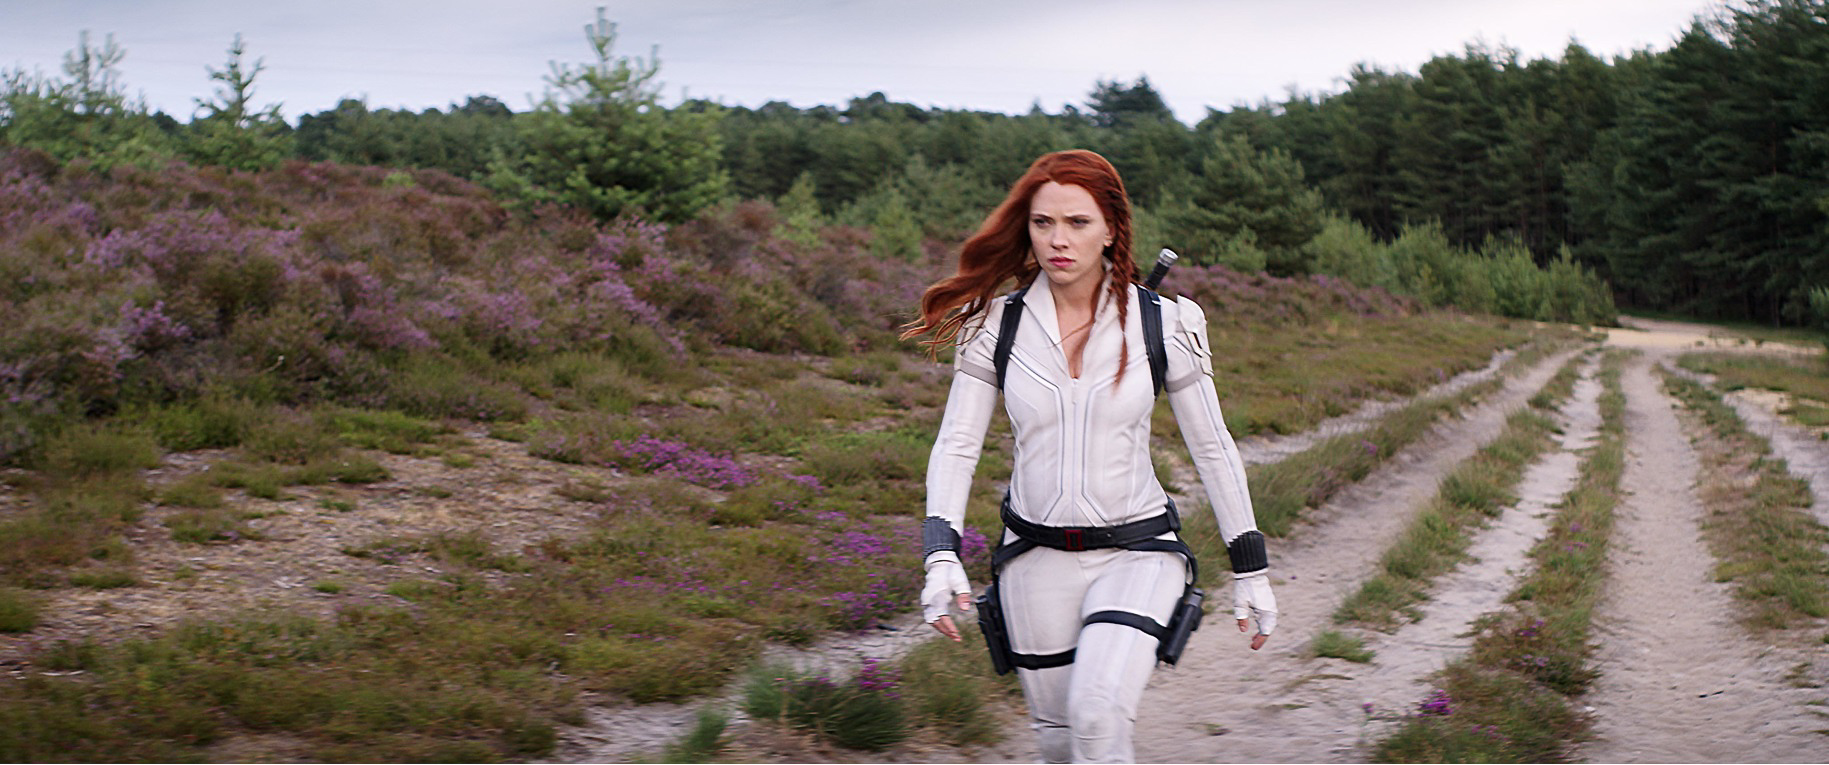 Action shot of Scarlett Johansson as Natasha Romanoff walking through Hankley Common, in Black Widow